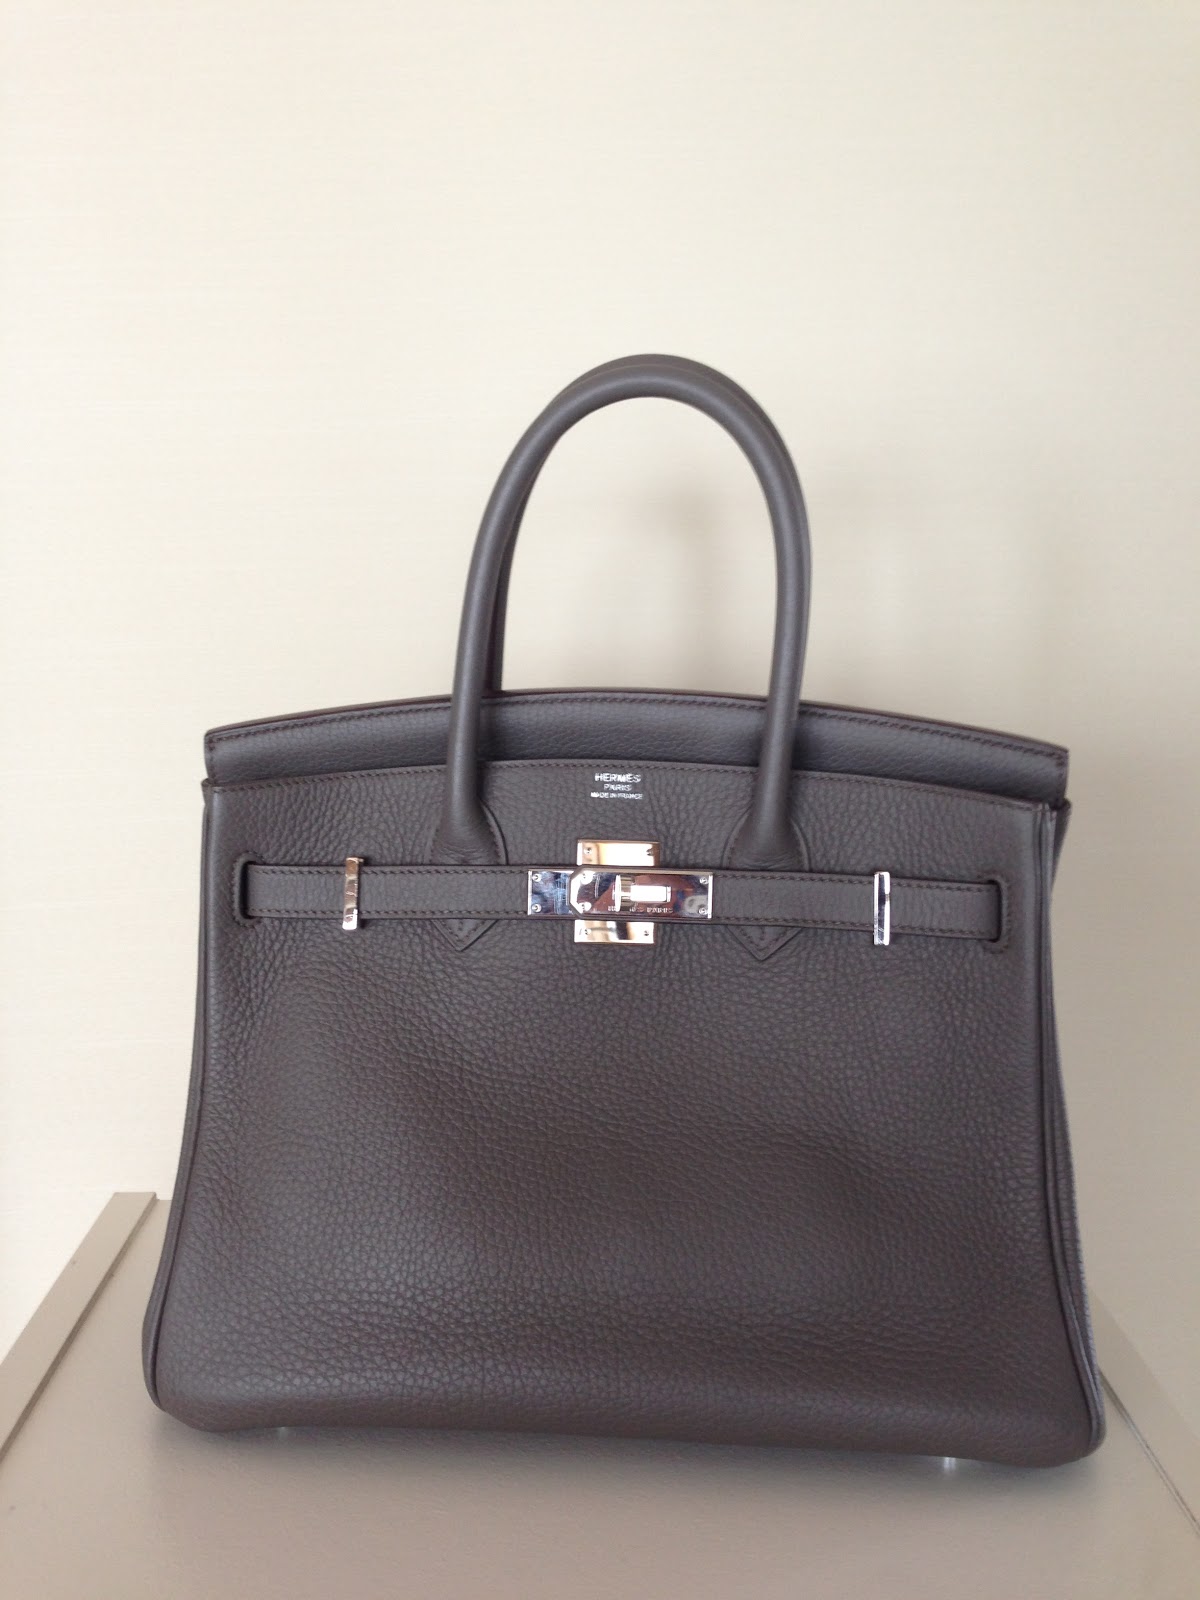 Preloved 100% Authentic Designer Bags for sale: (Sold)Hermes Birkin 30cm in Etain